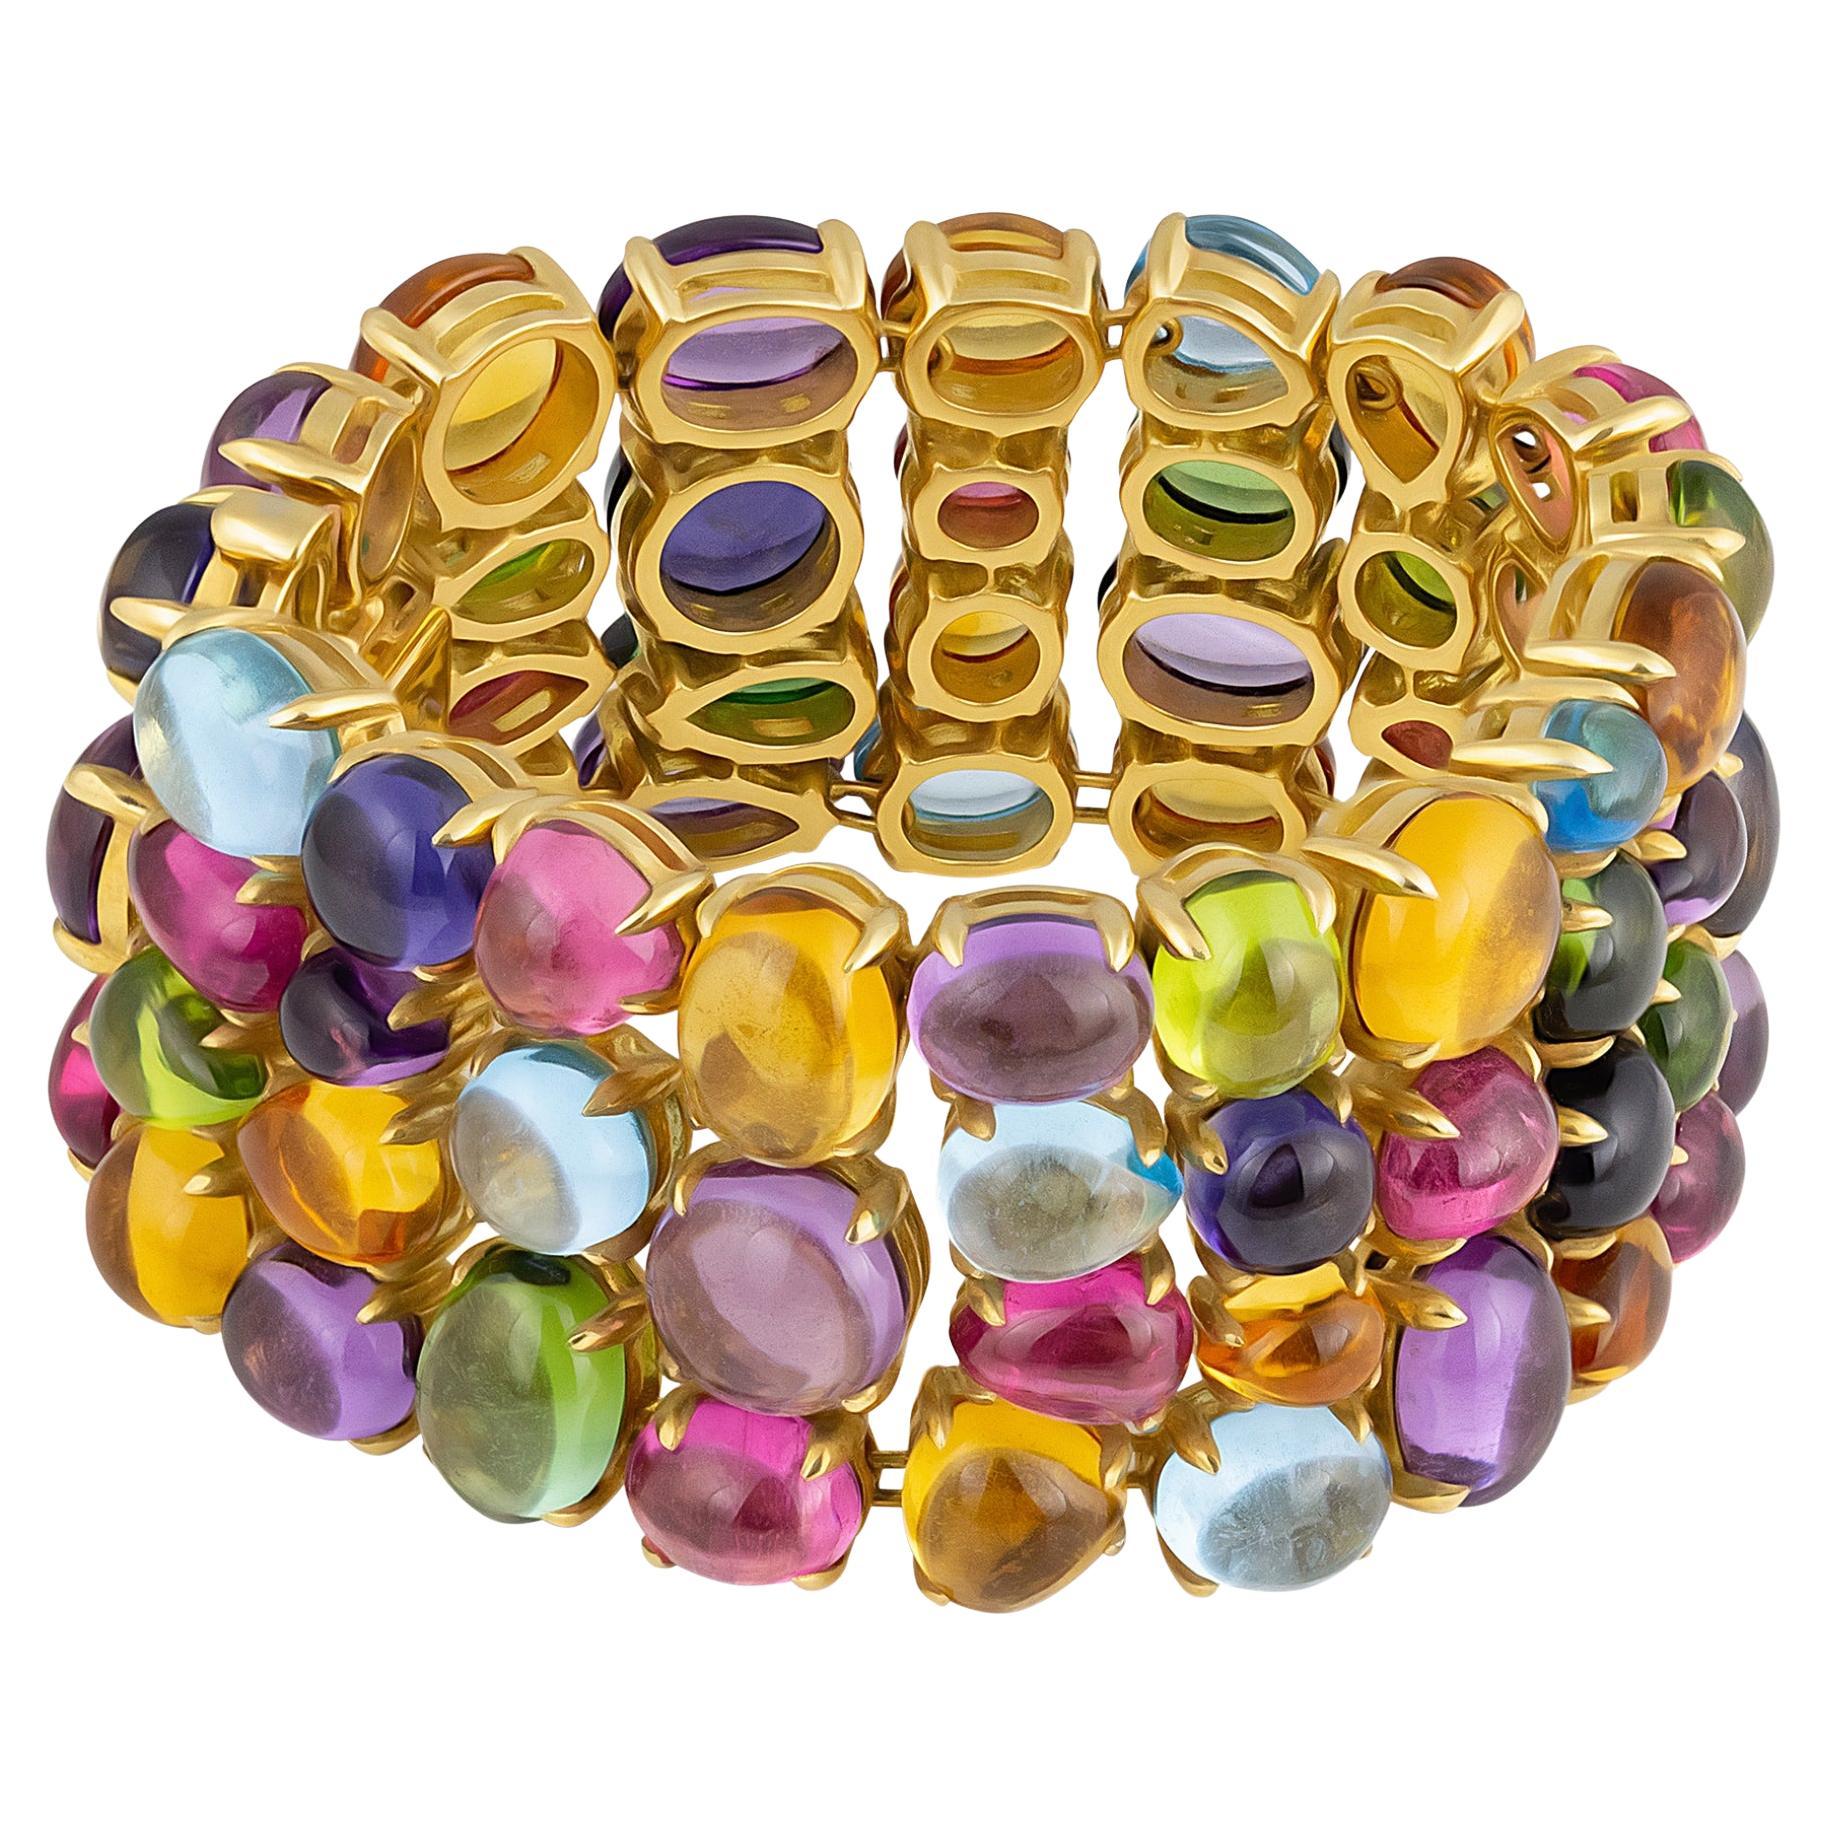 Bvlgari Allegra Bracelet en or jaune 18 carats et pierres précieuses multicolores